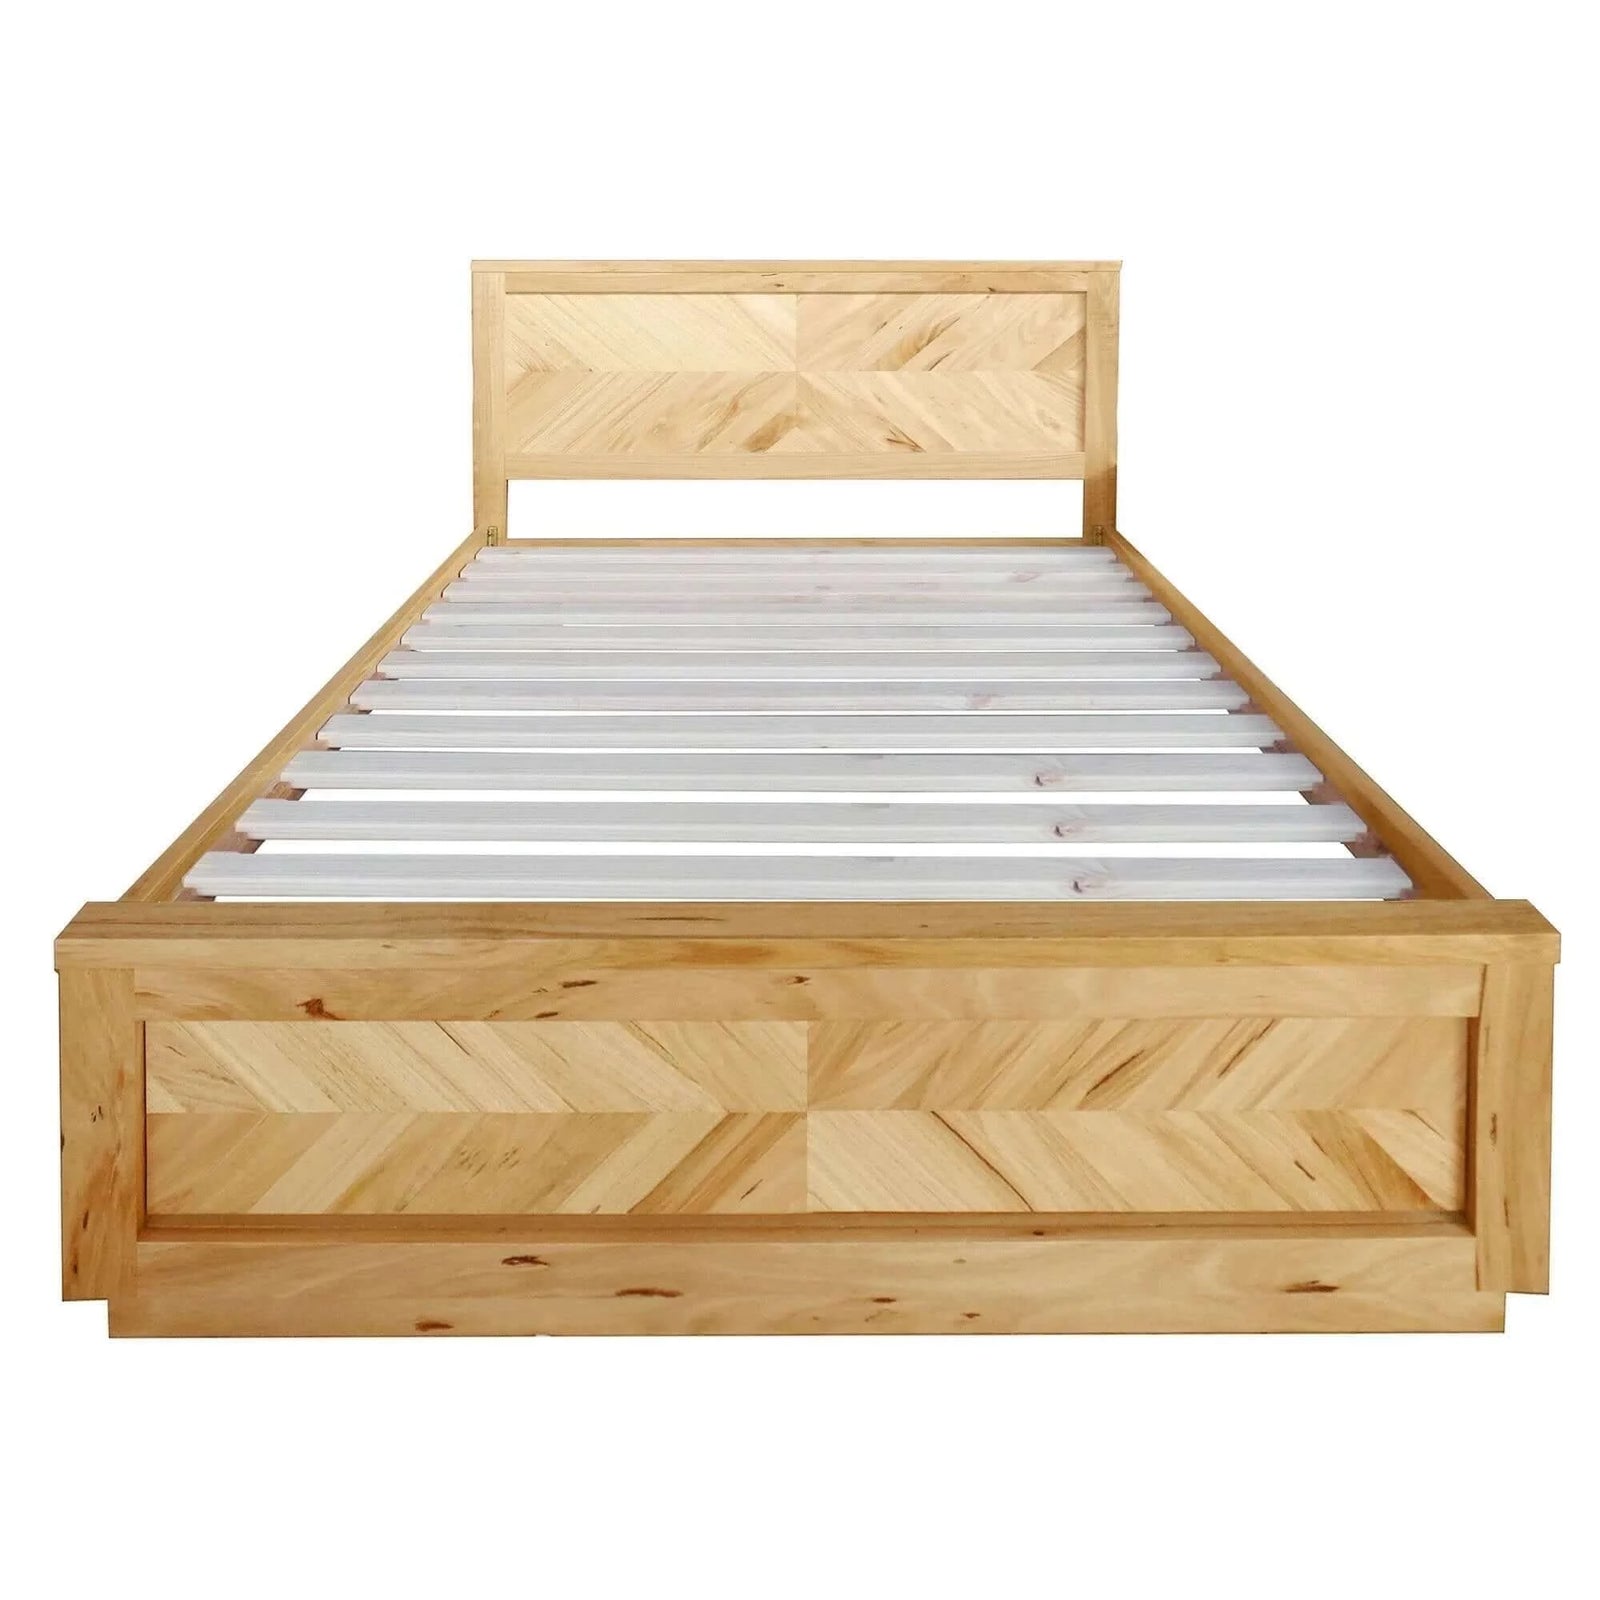 Buy rosemallow queen size bed parquet solid messmate timber wood frame mattress base - upinteriors-Upinteriors